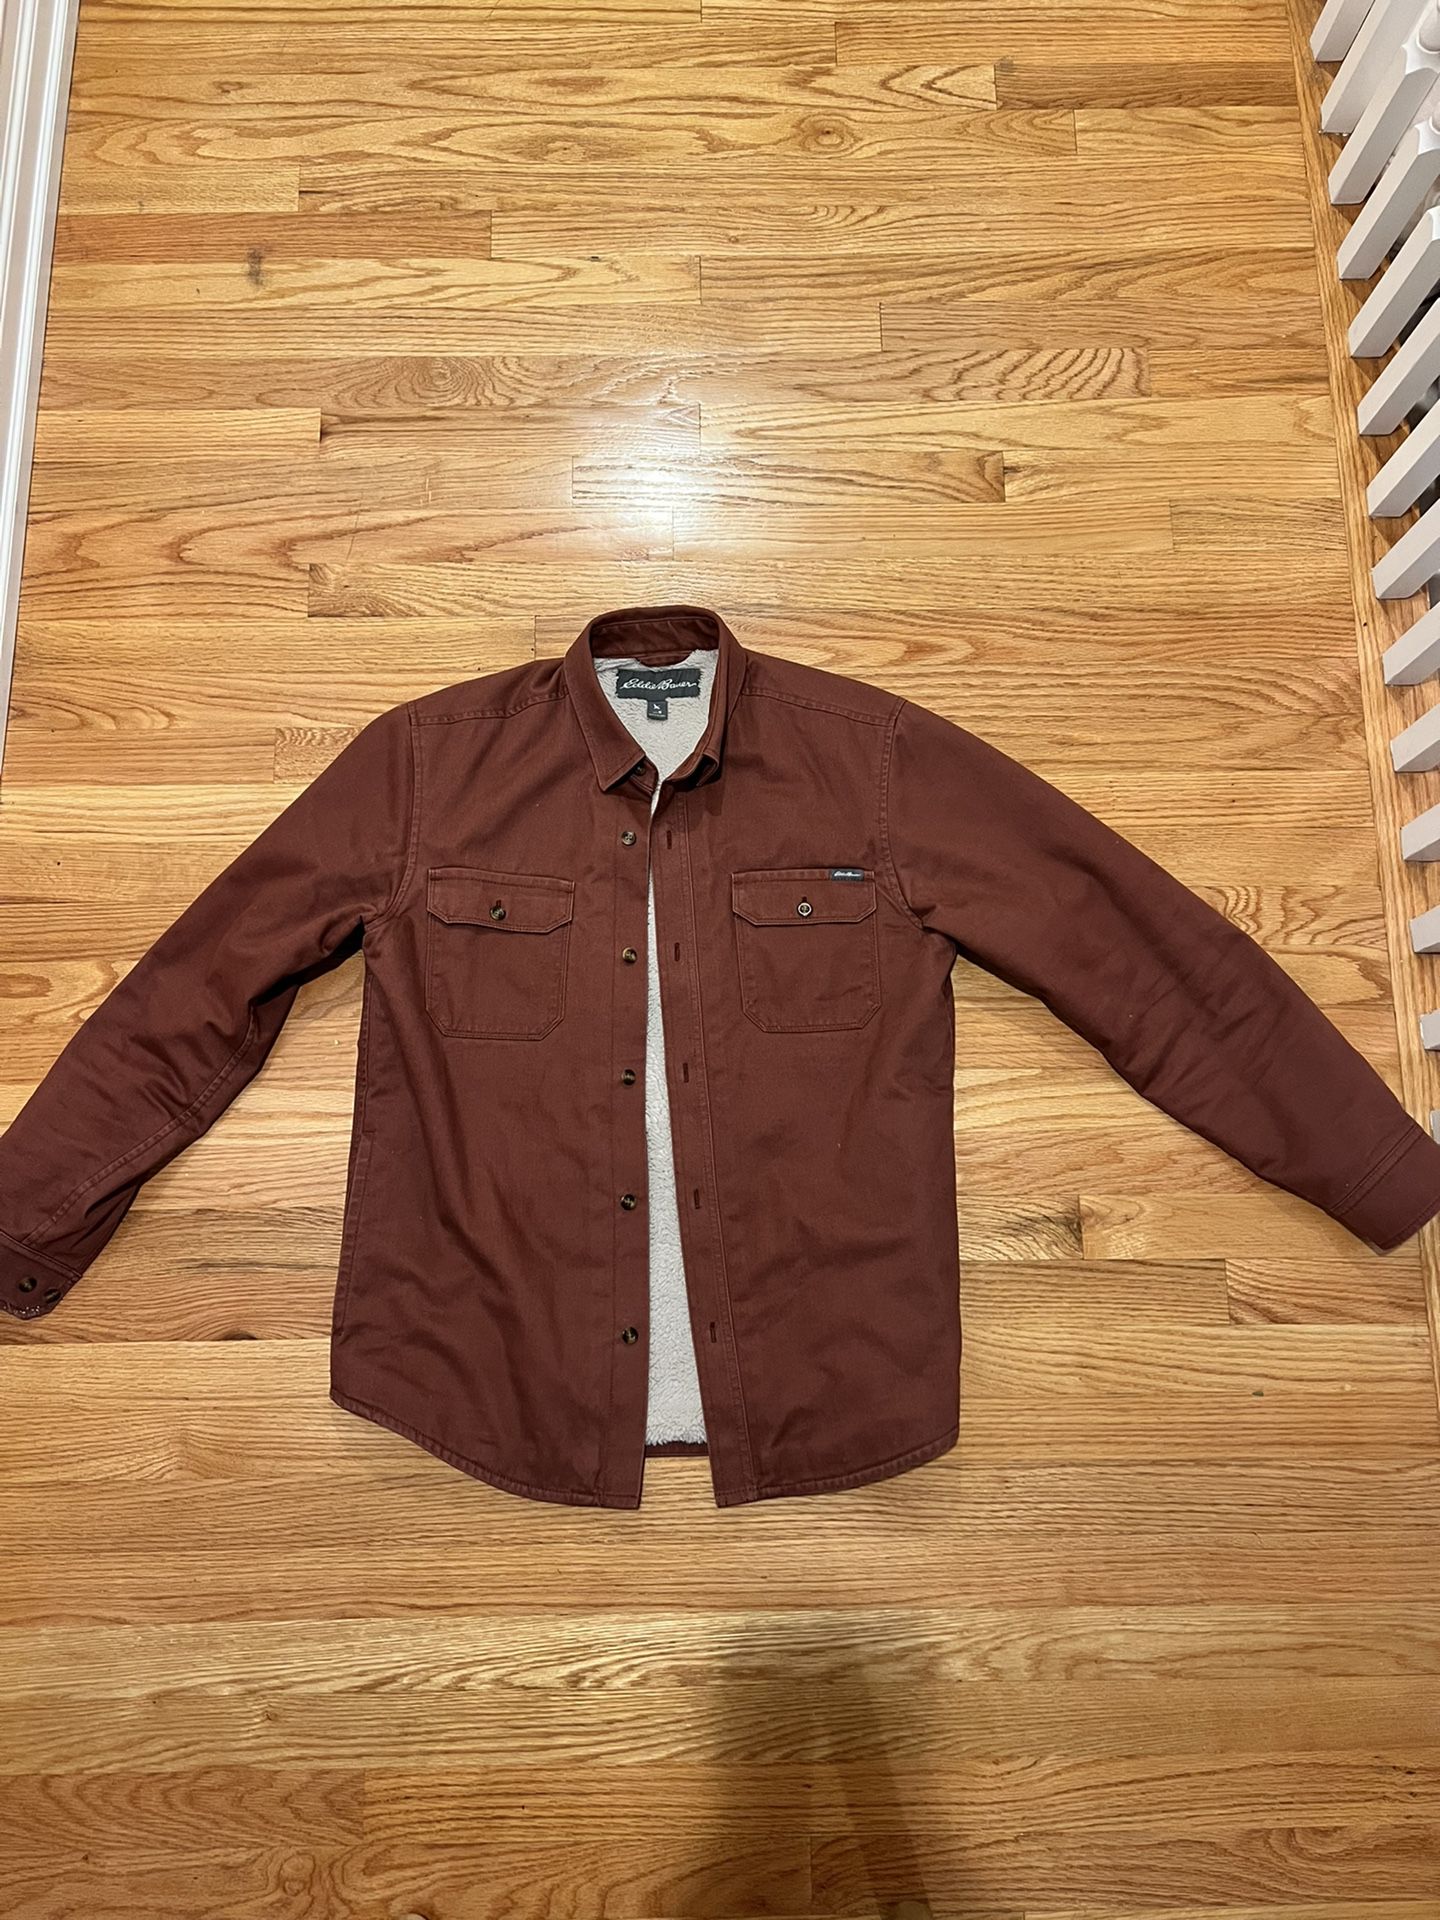 Men’s Eddie Bauer Sherpa-Lined Shirt Jacket - Size M